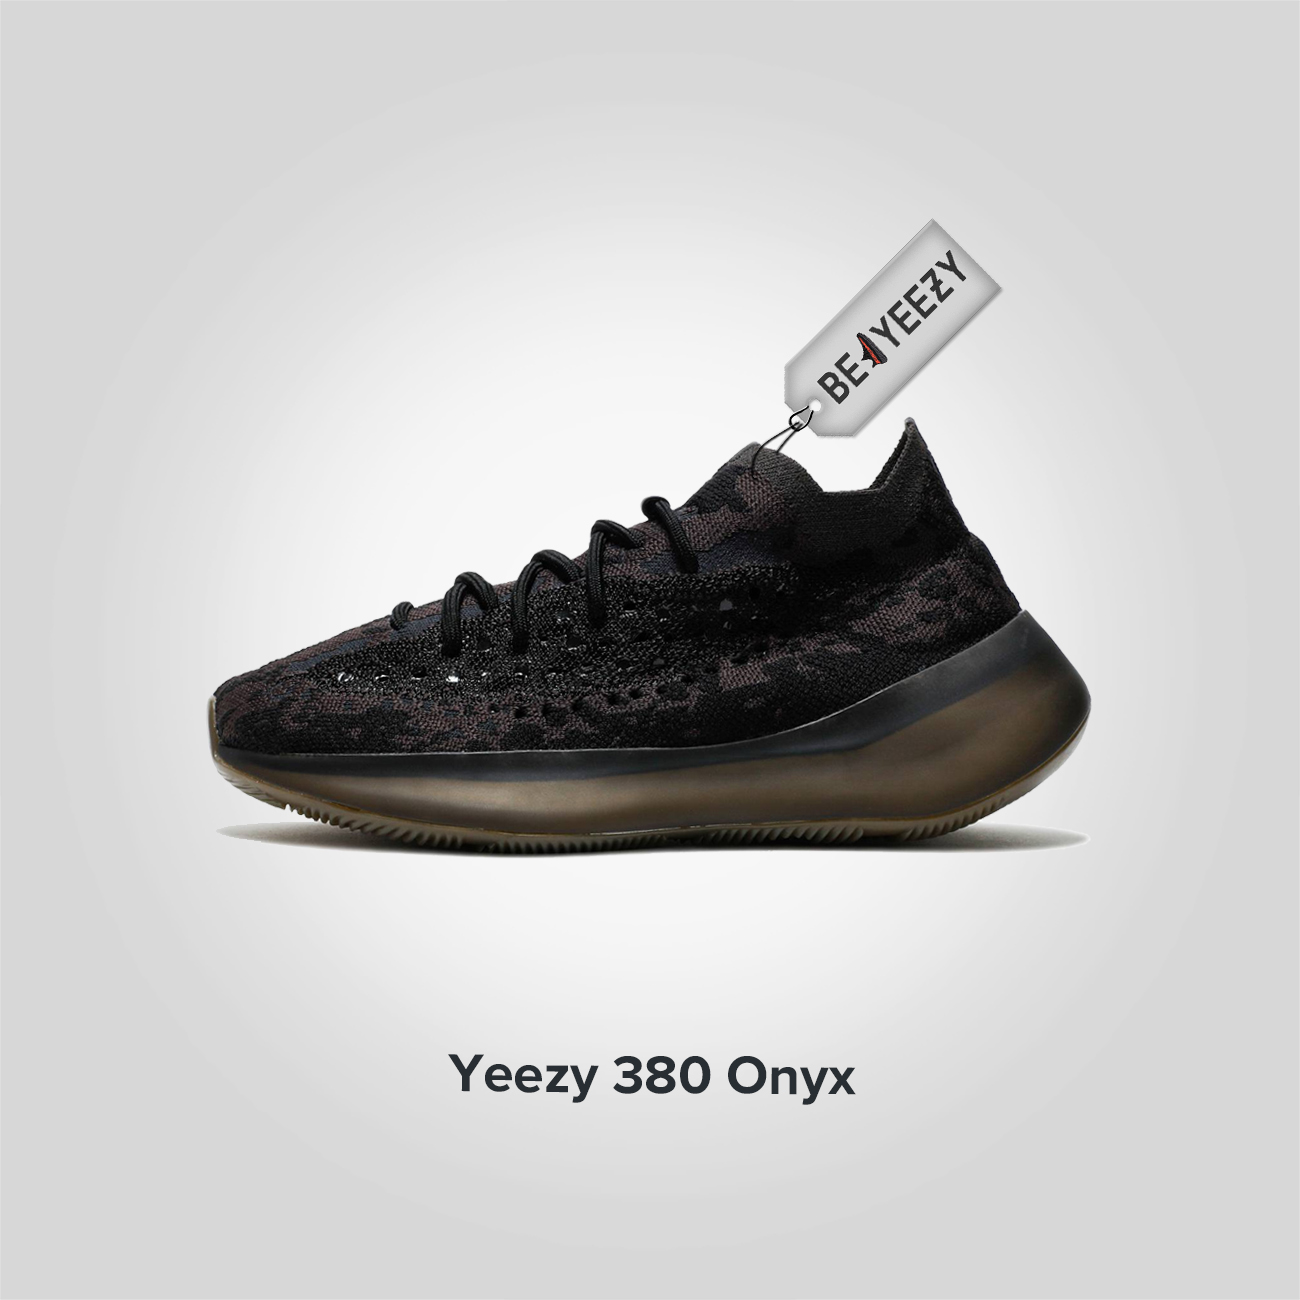 Yeezy 380 Onyx